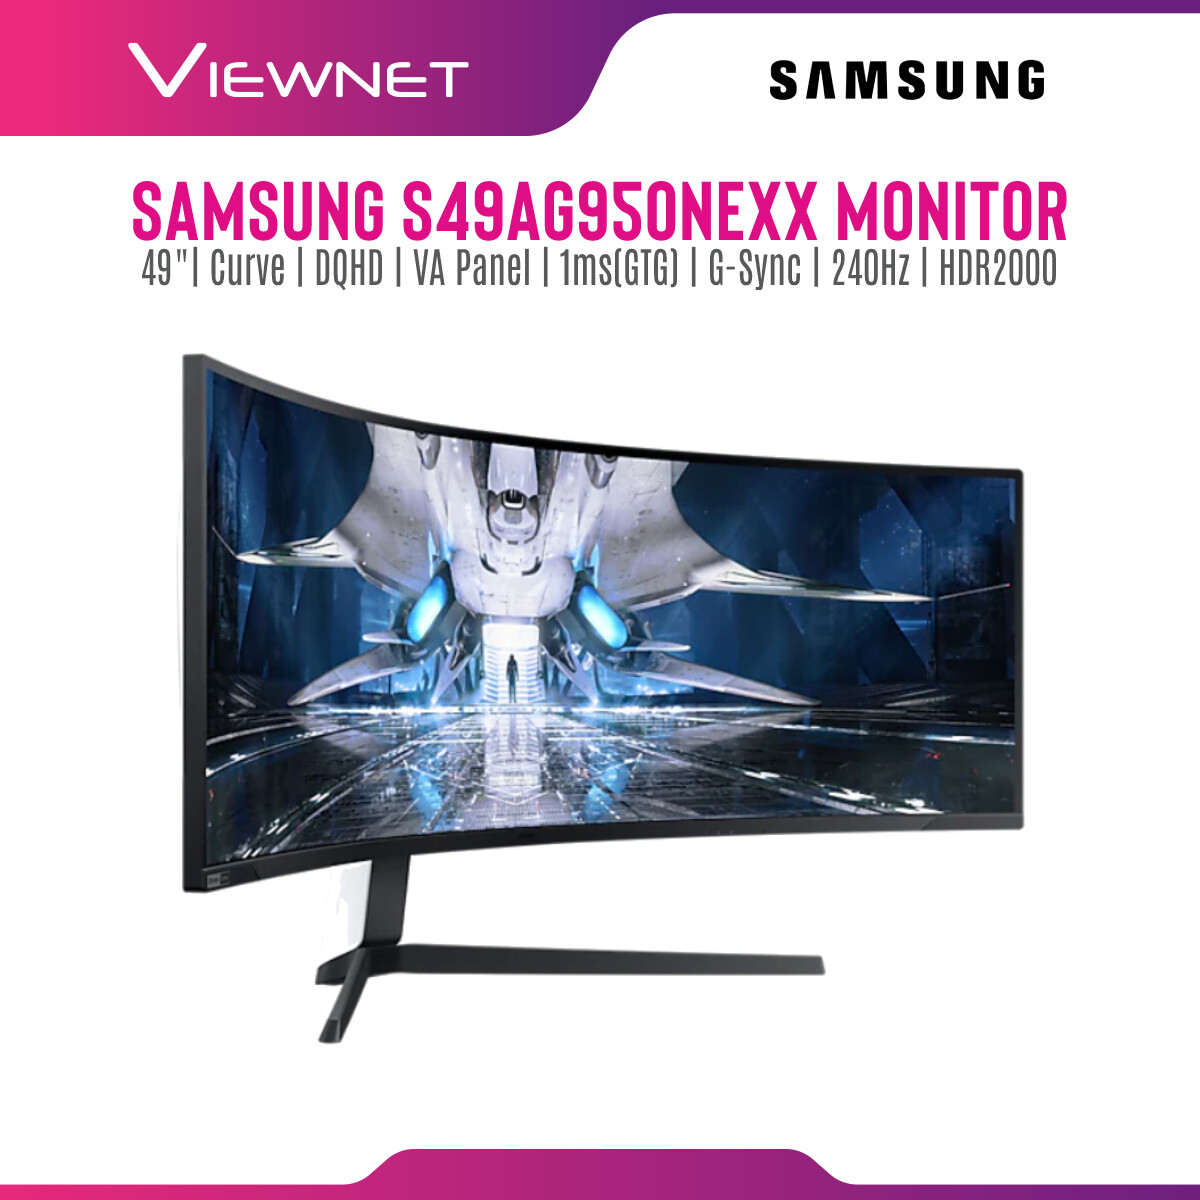 Samsung Odyssey G9 NEO S49AG950NE Curve 49" Gaming Monitor (LS49AG950NEXXS)(DQHD, VA, 1ms(GTG), HDR2000, F/G-Sync 240hz)